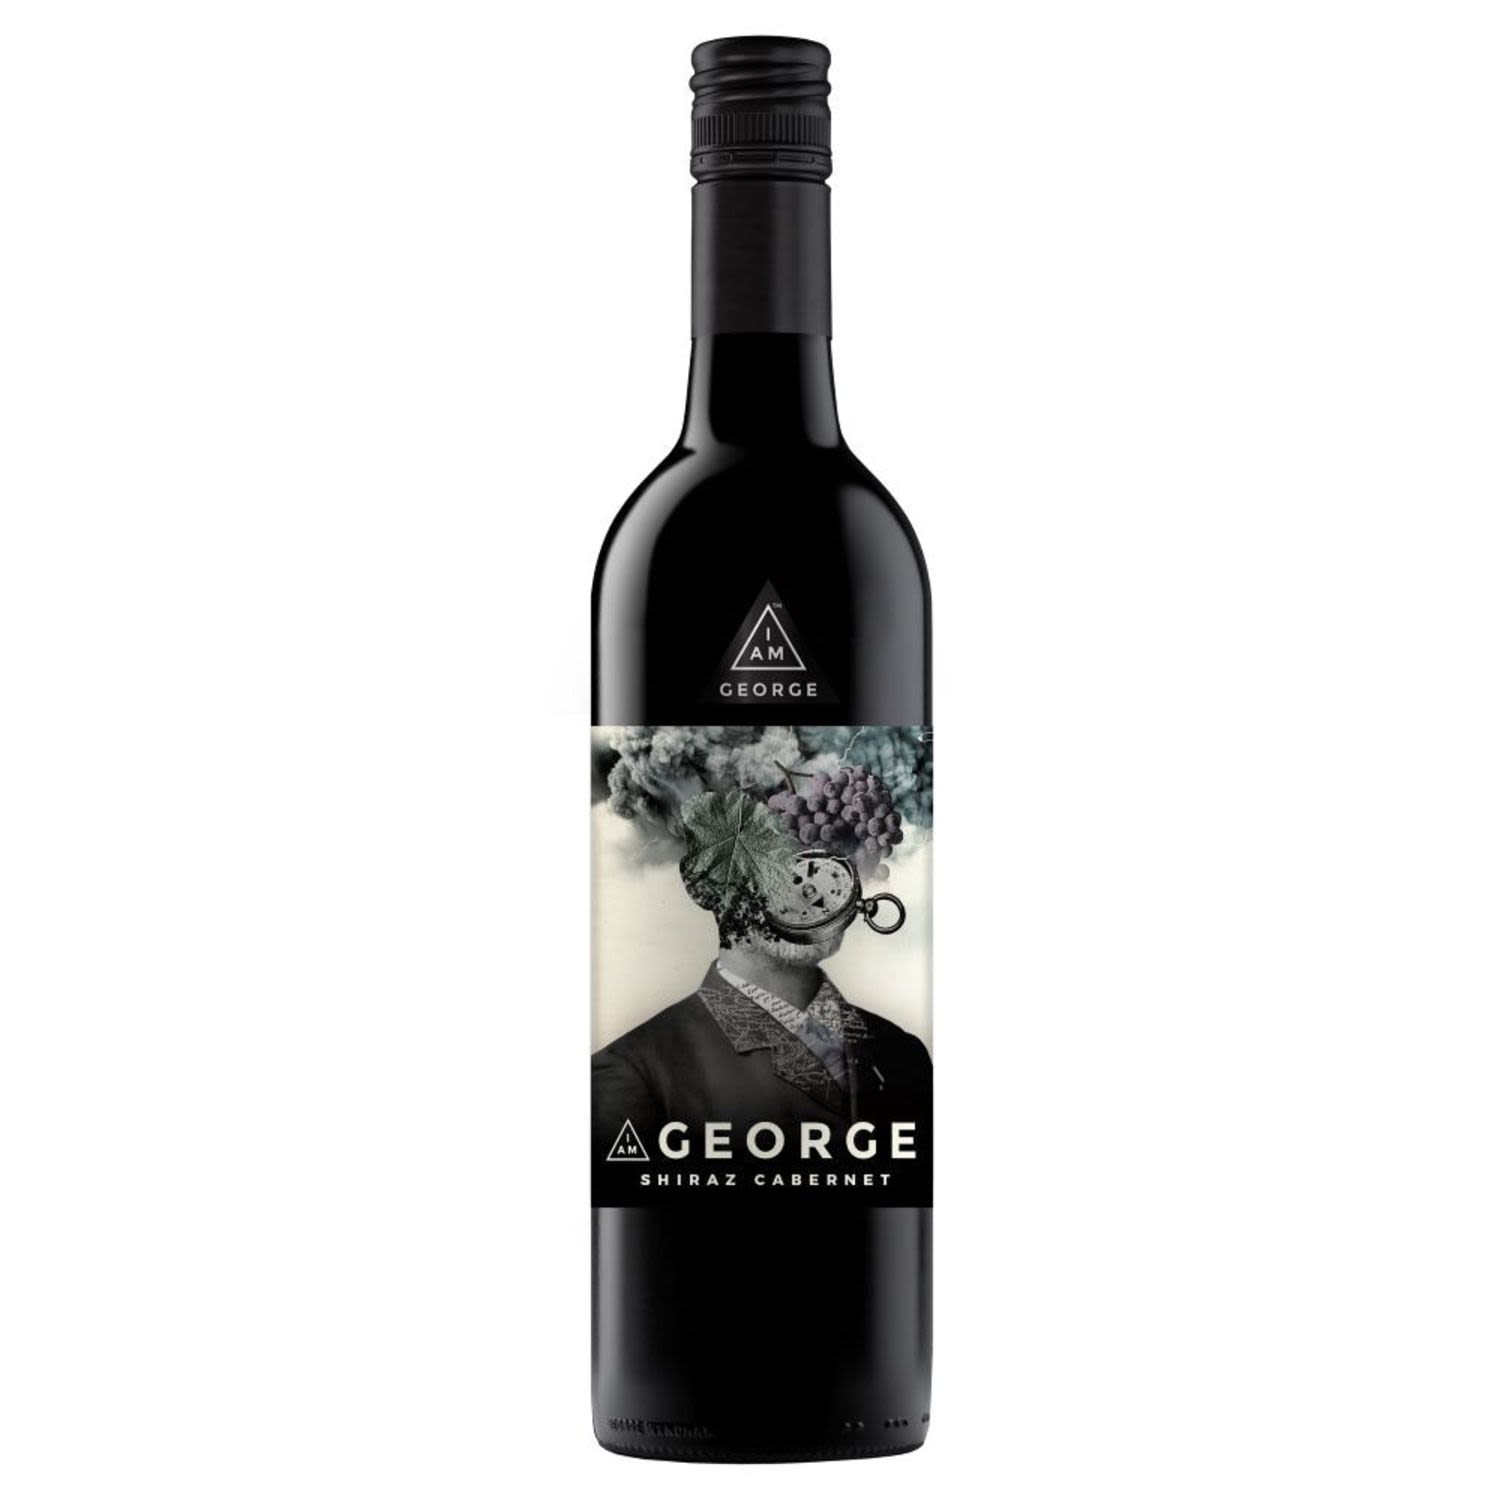 I Am George The Man Shiraz Cabernet 750mL Bottle